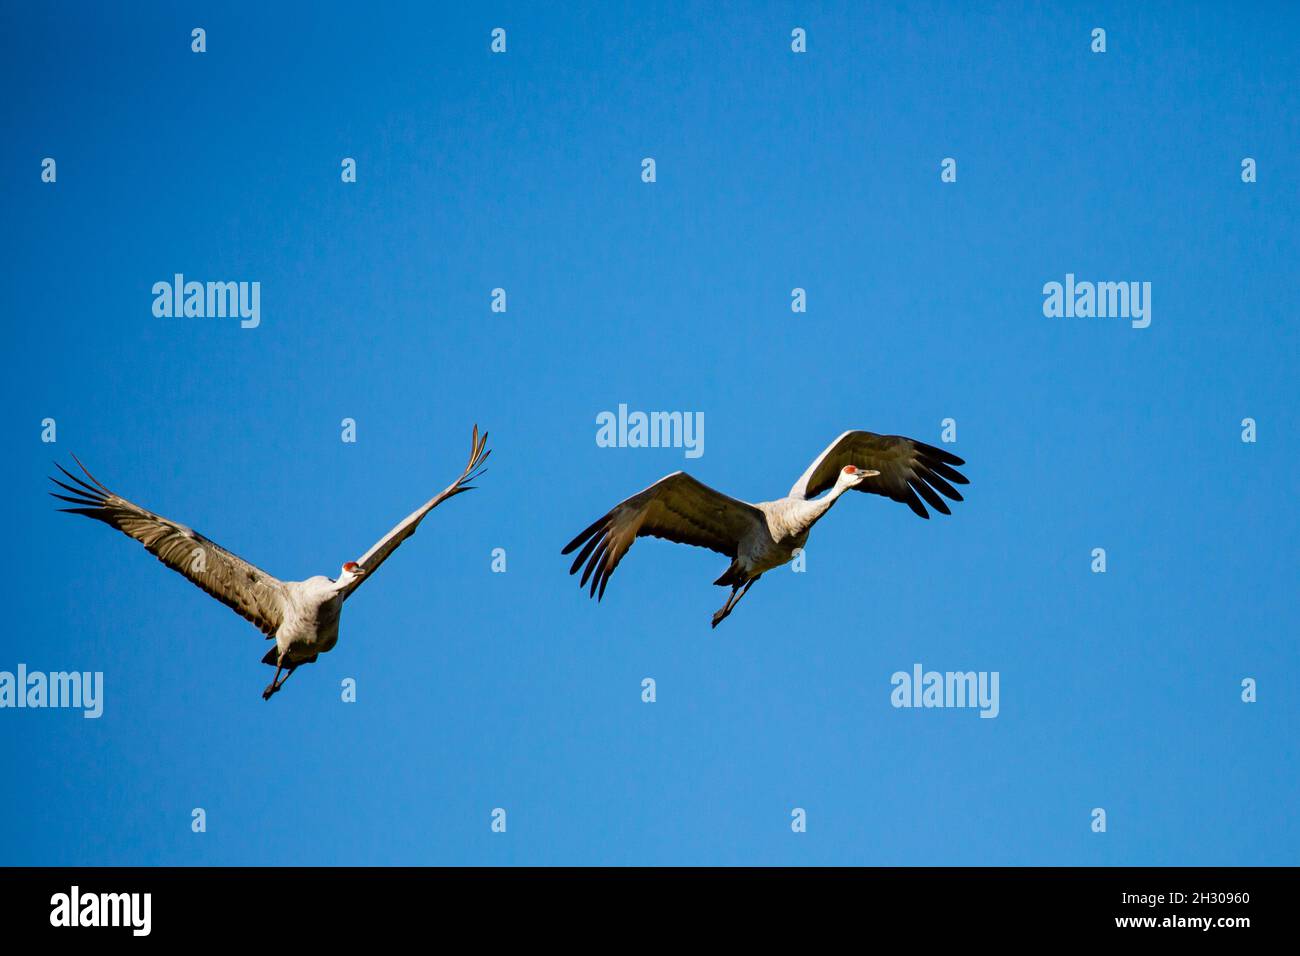 Paire de grues du Canada (Grus canadensis) volant dans un ciel bleu, horizontal Banque D'Images